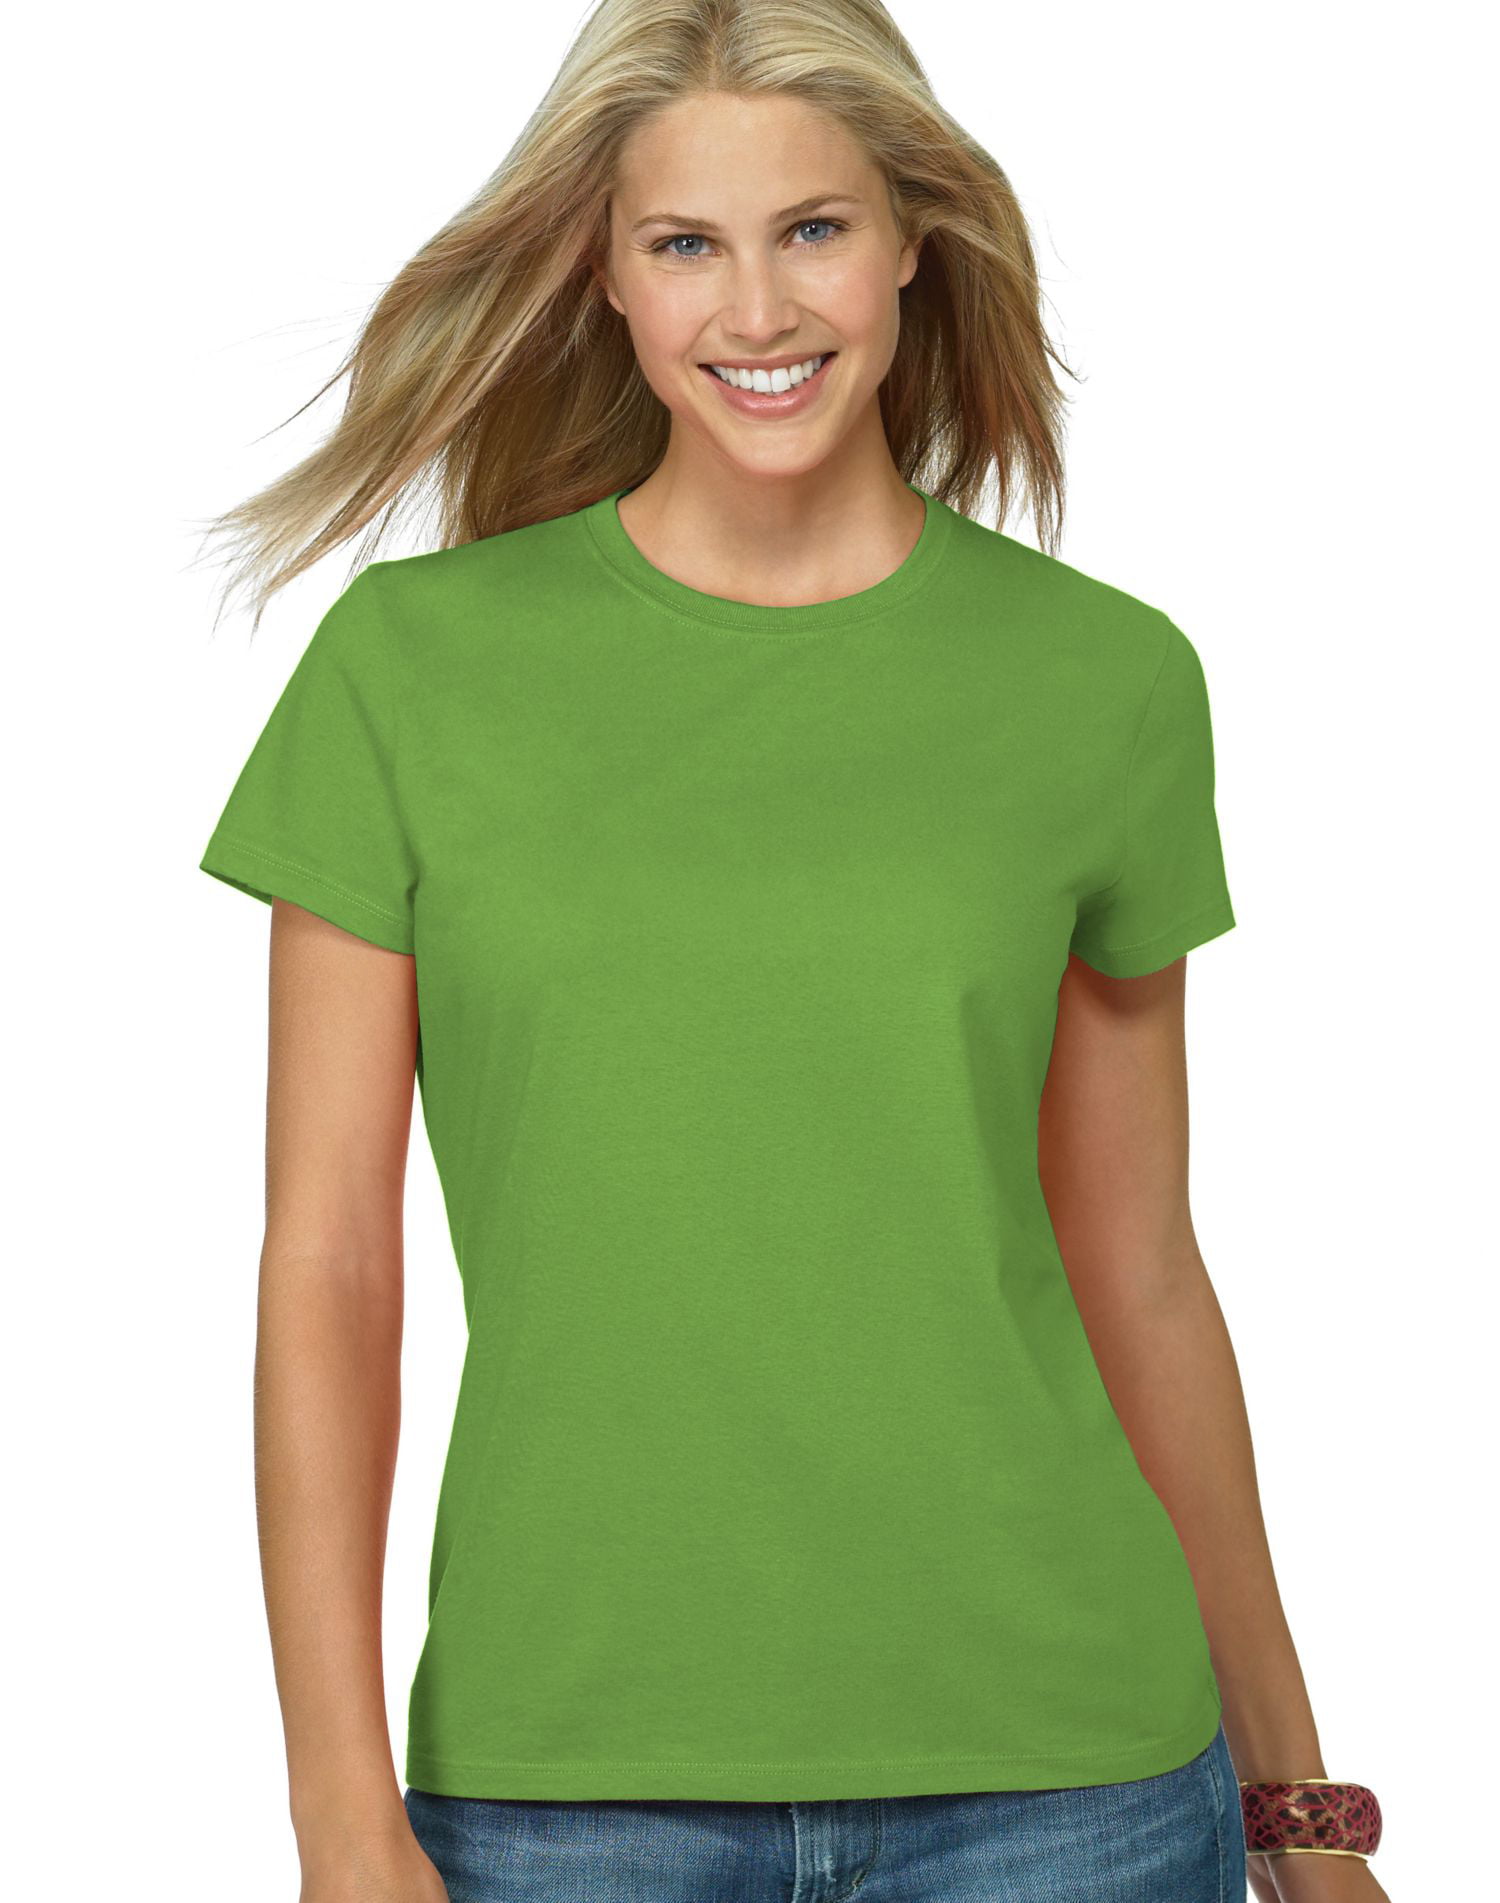 Hanes - Hanes Nano-T Women`s T-shirt, SL04, S, Pear Green - Walmart.com ...